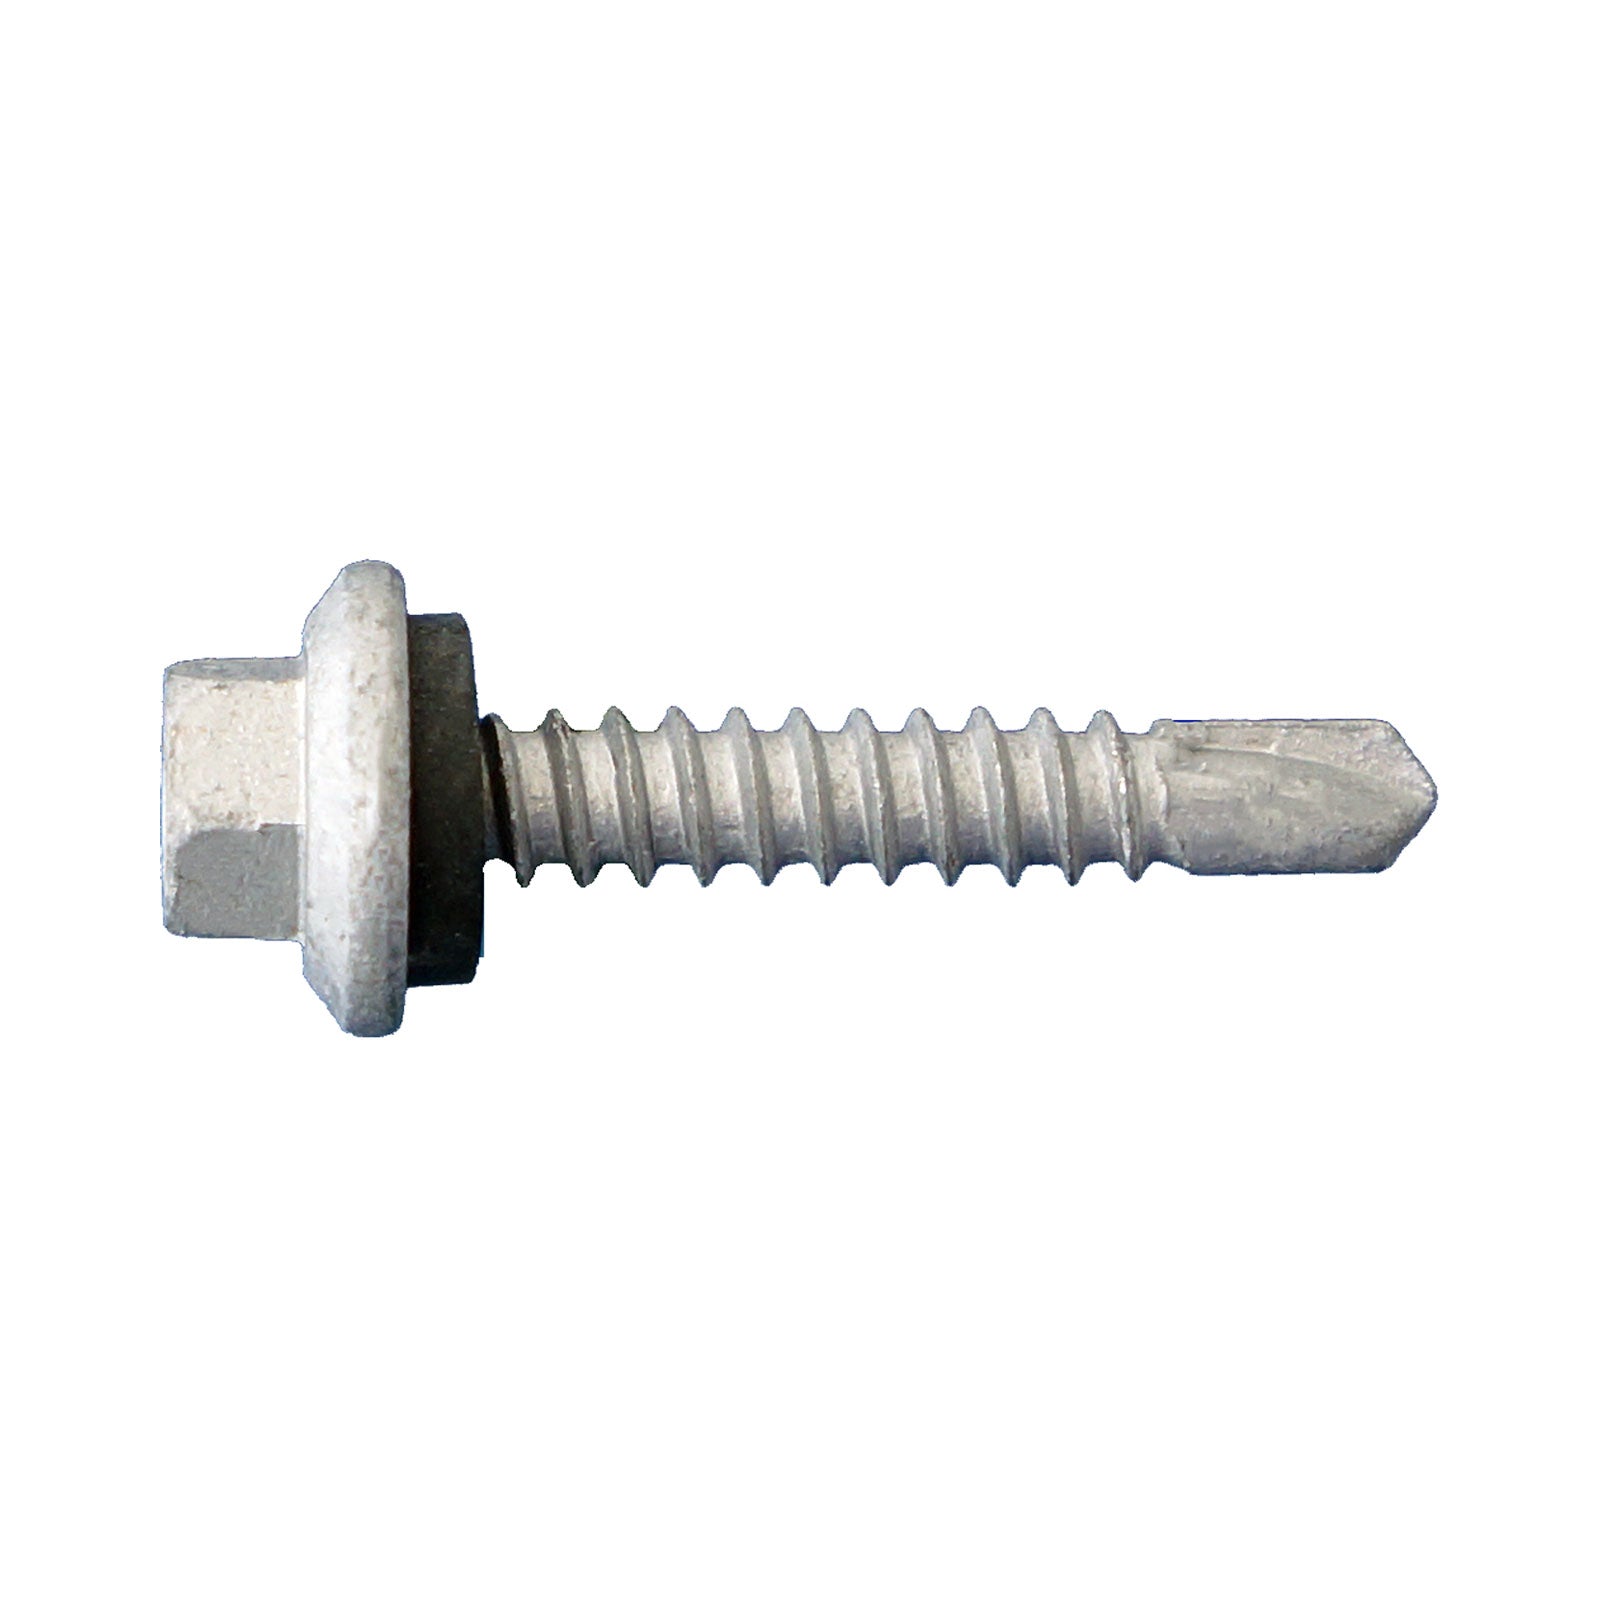 #14 x 1" Self-Drilling Metal Screw w/Washer, Hex Head - Dagger-Guard Coating, Pkg 2000